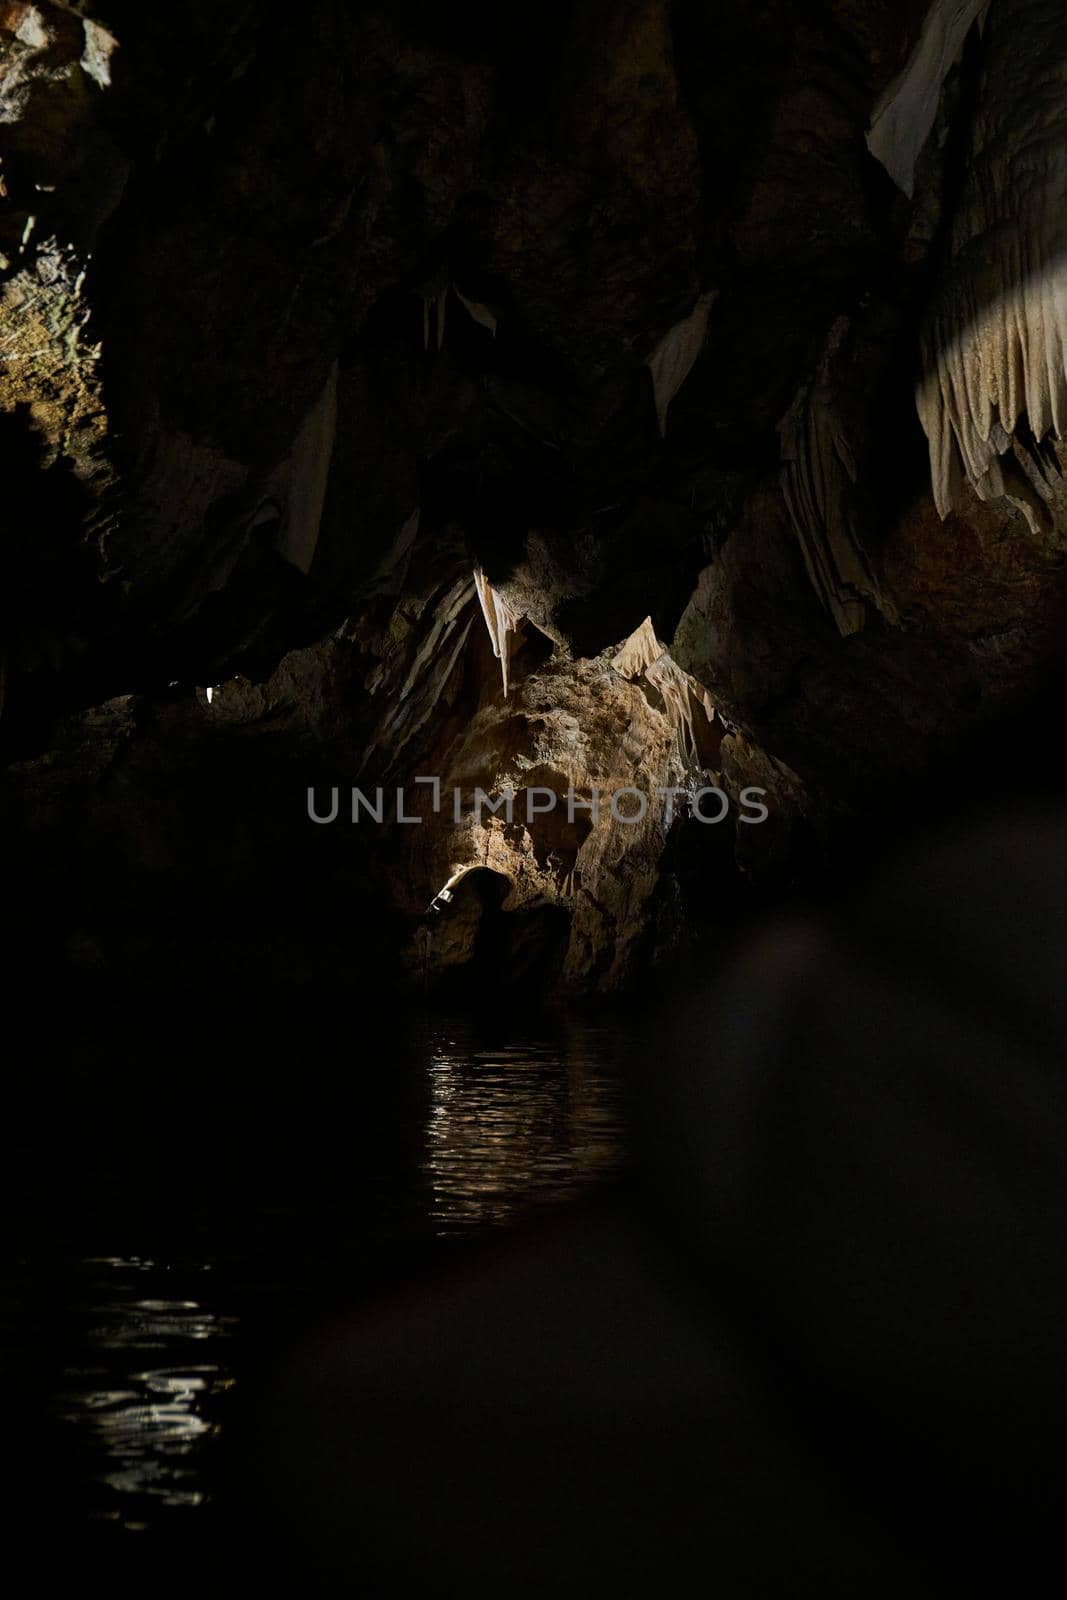 Limestone formations inside Macocha caves, Czech Republic